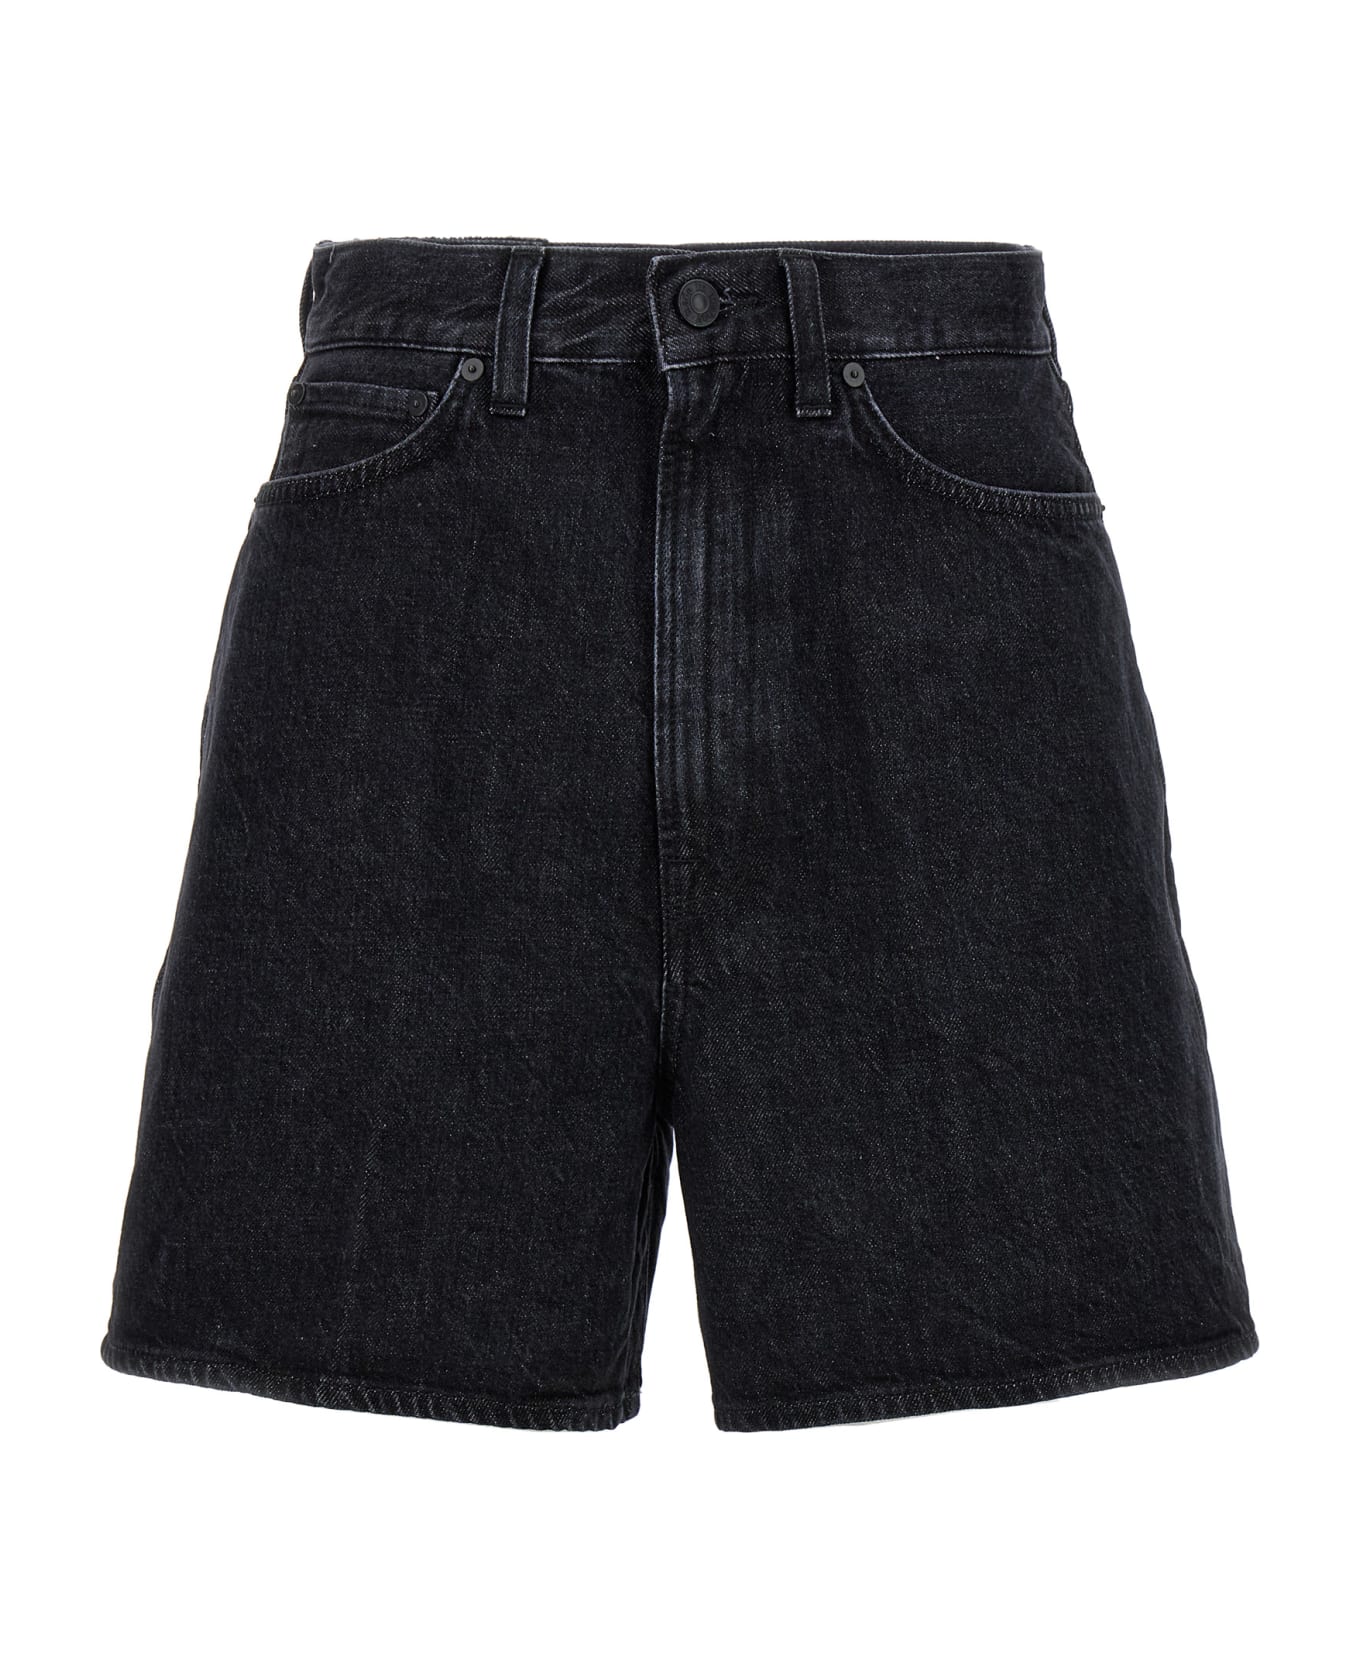 Made in Tomboy Denim Bermuda Shorts - Black  